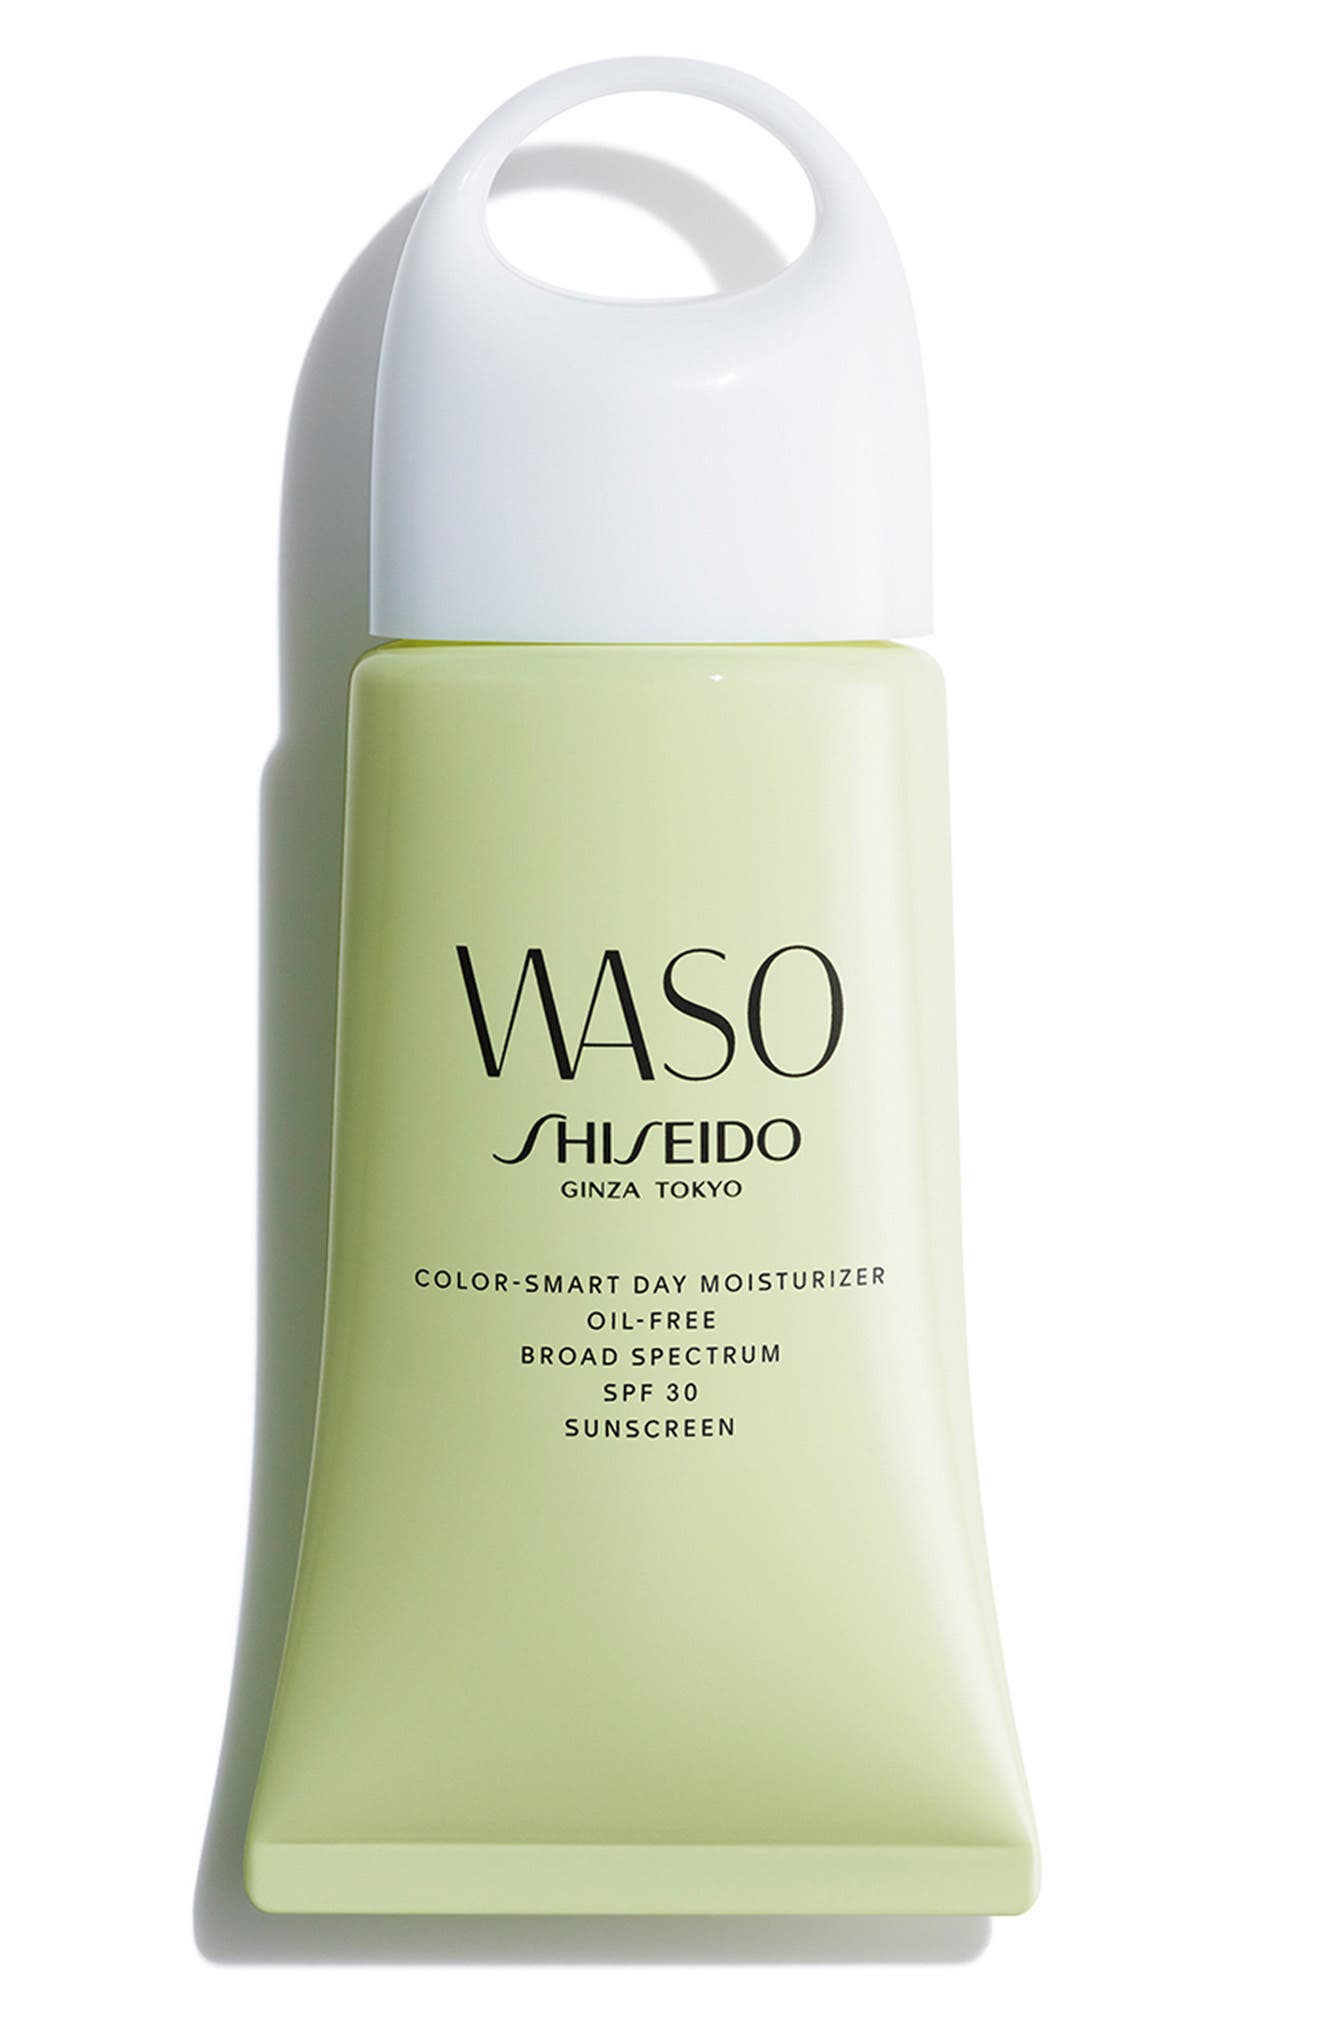 Shiseido Waso: Color-smart Day Moisturizer Oil-free Spf 30